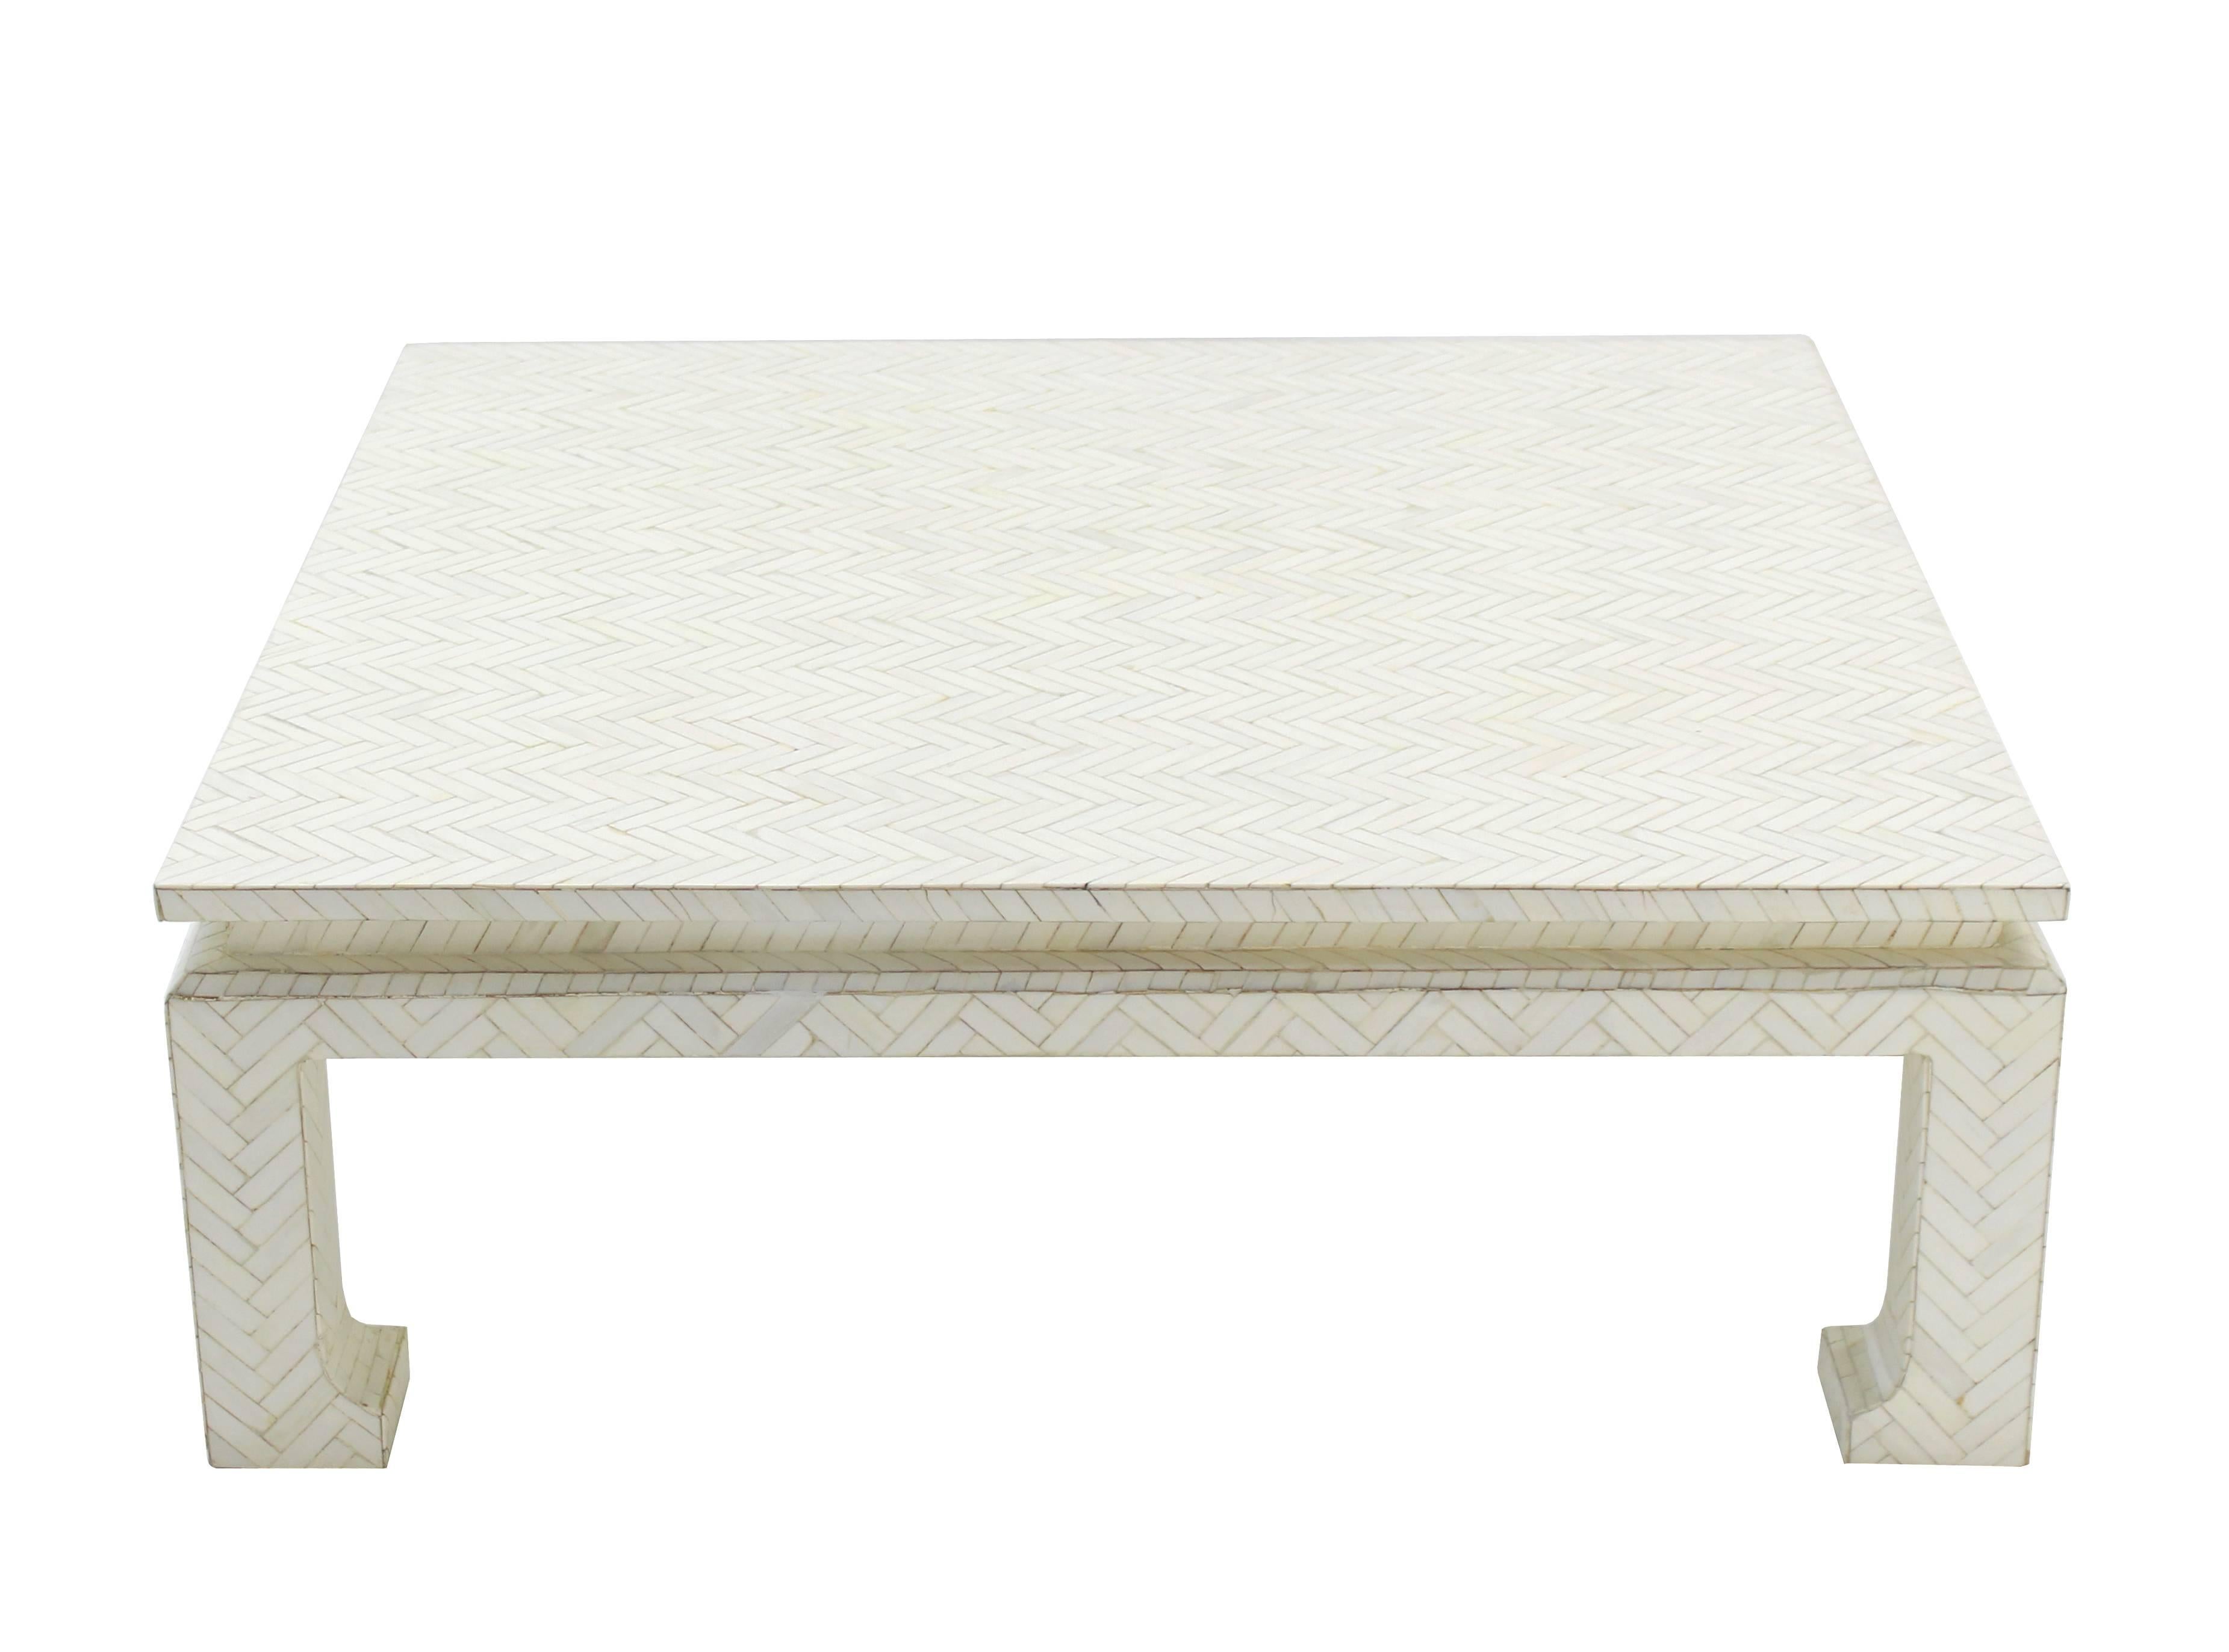 Very nice Mid-Century Modern white bone tile square coffee table.